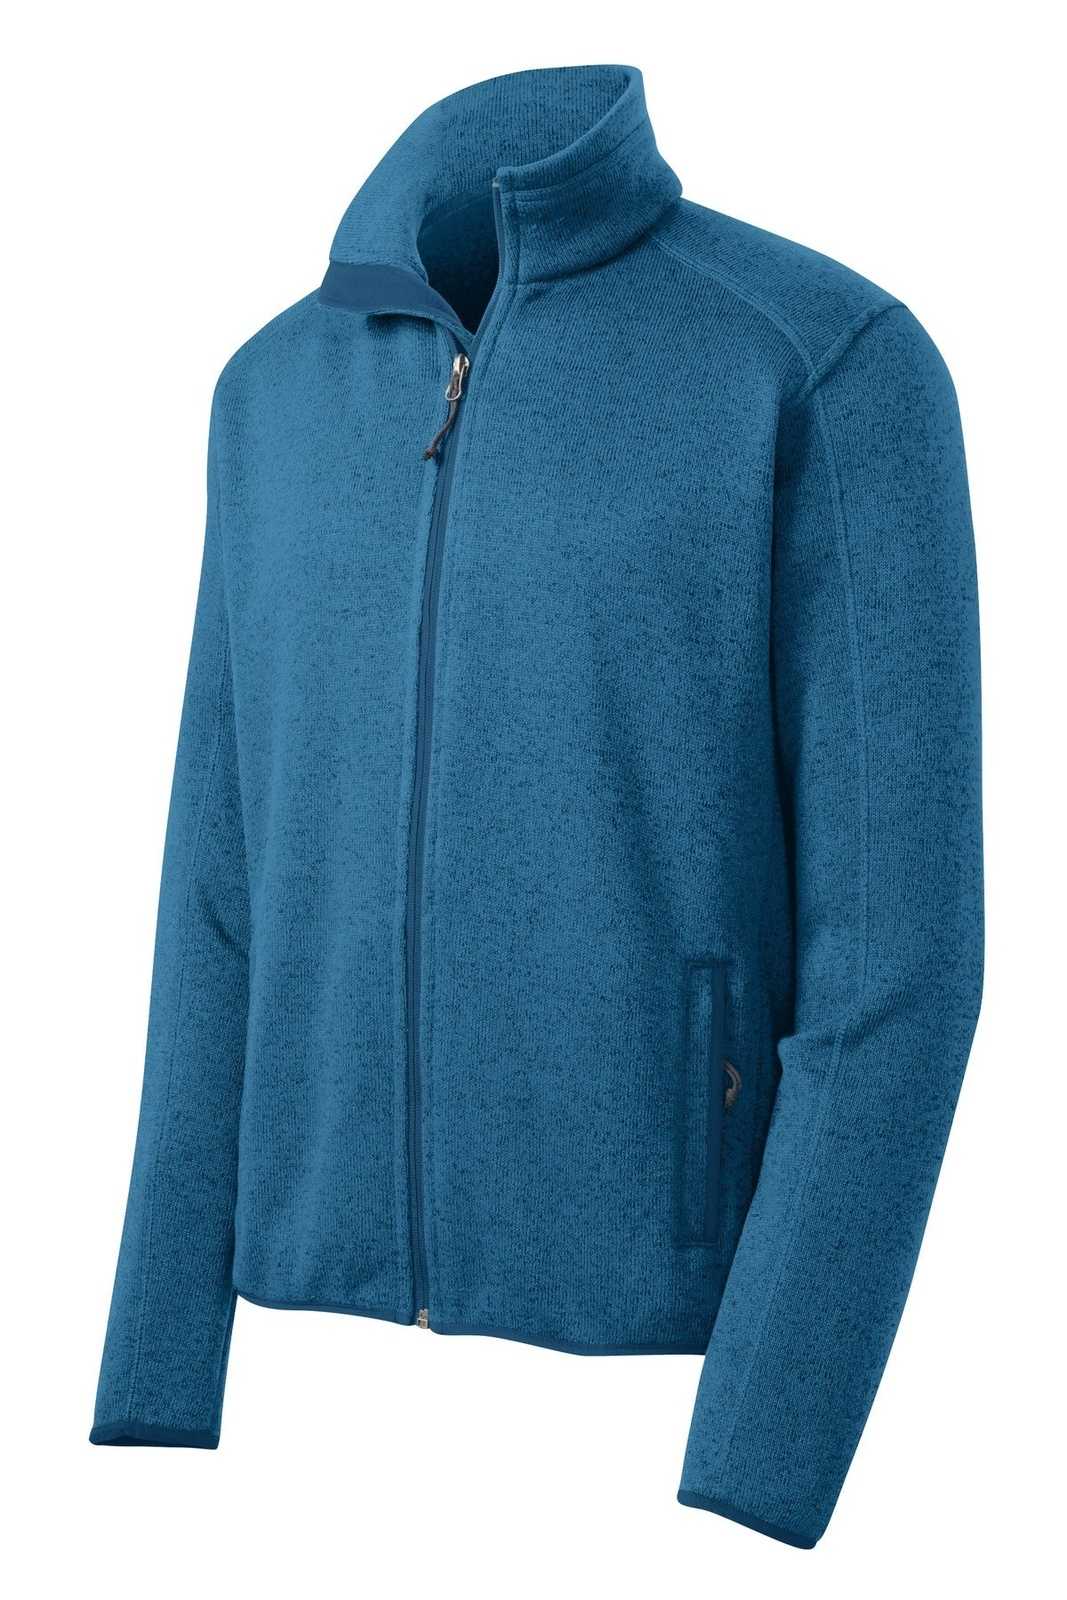 Port Authority F232 Sweater Fleece Jacket - Medium Blue Heather - HIT a Double - 5